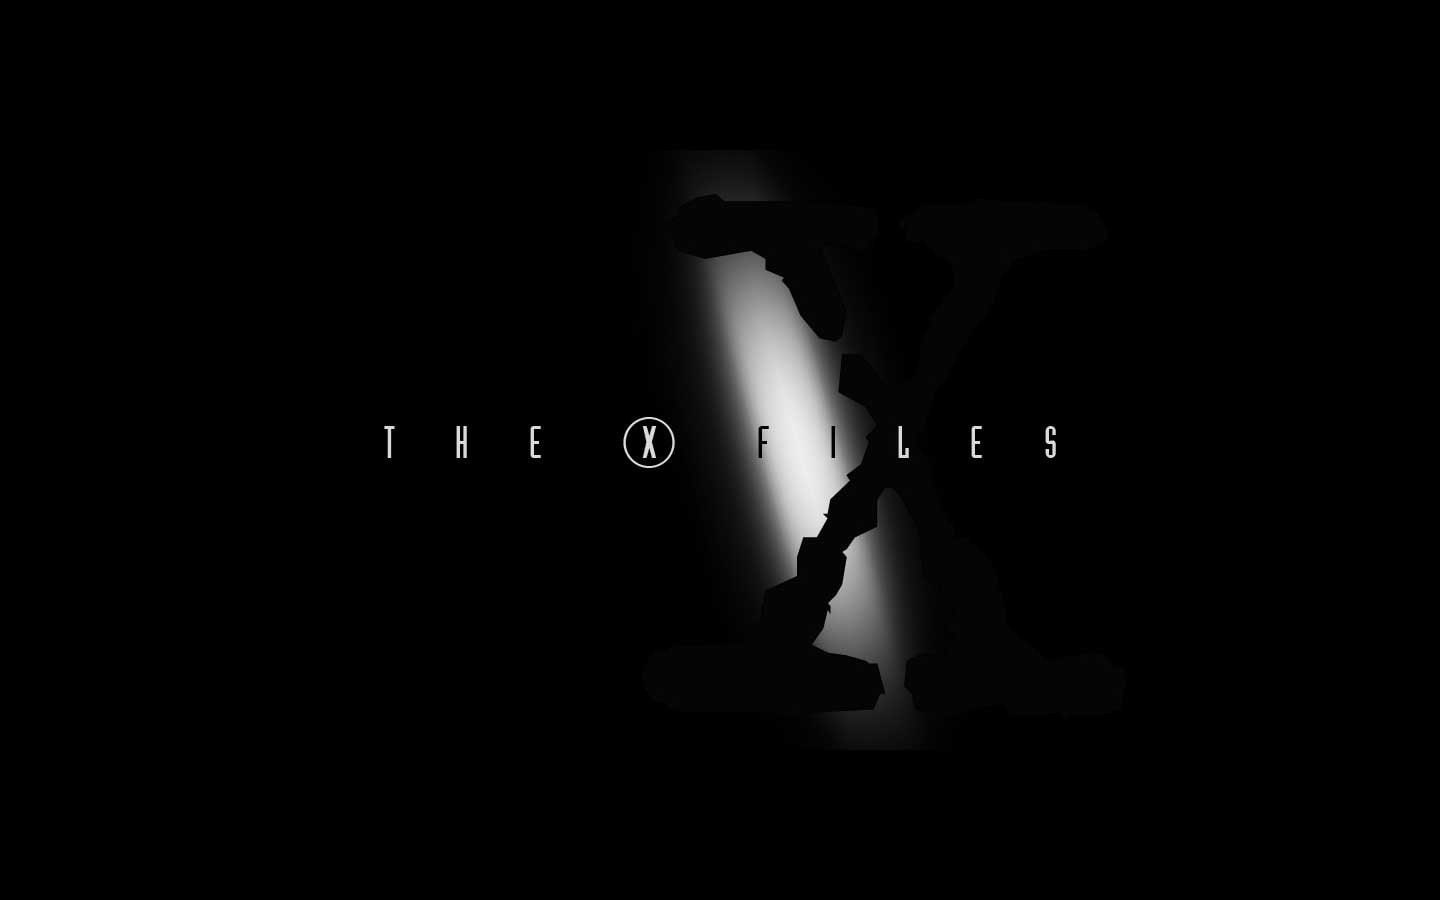 black, Files, logo, The X, TV, dark, indoors, no people, copy space